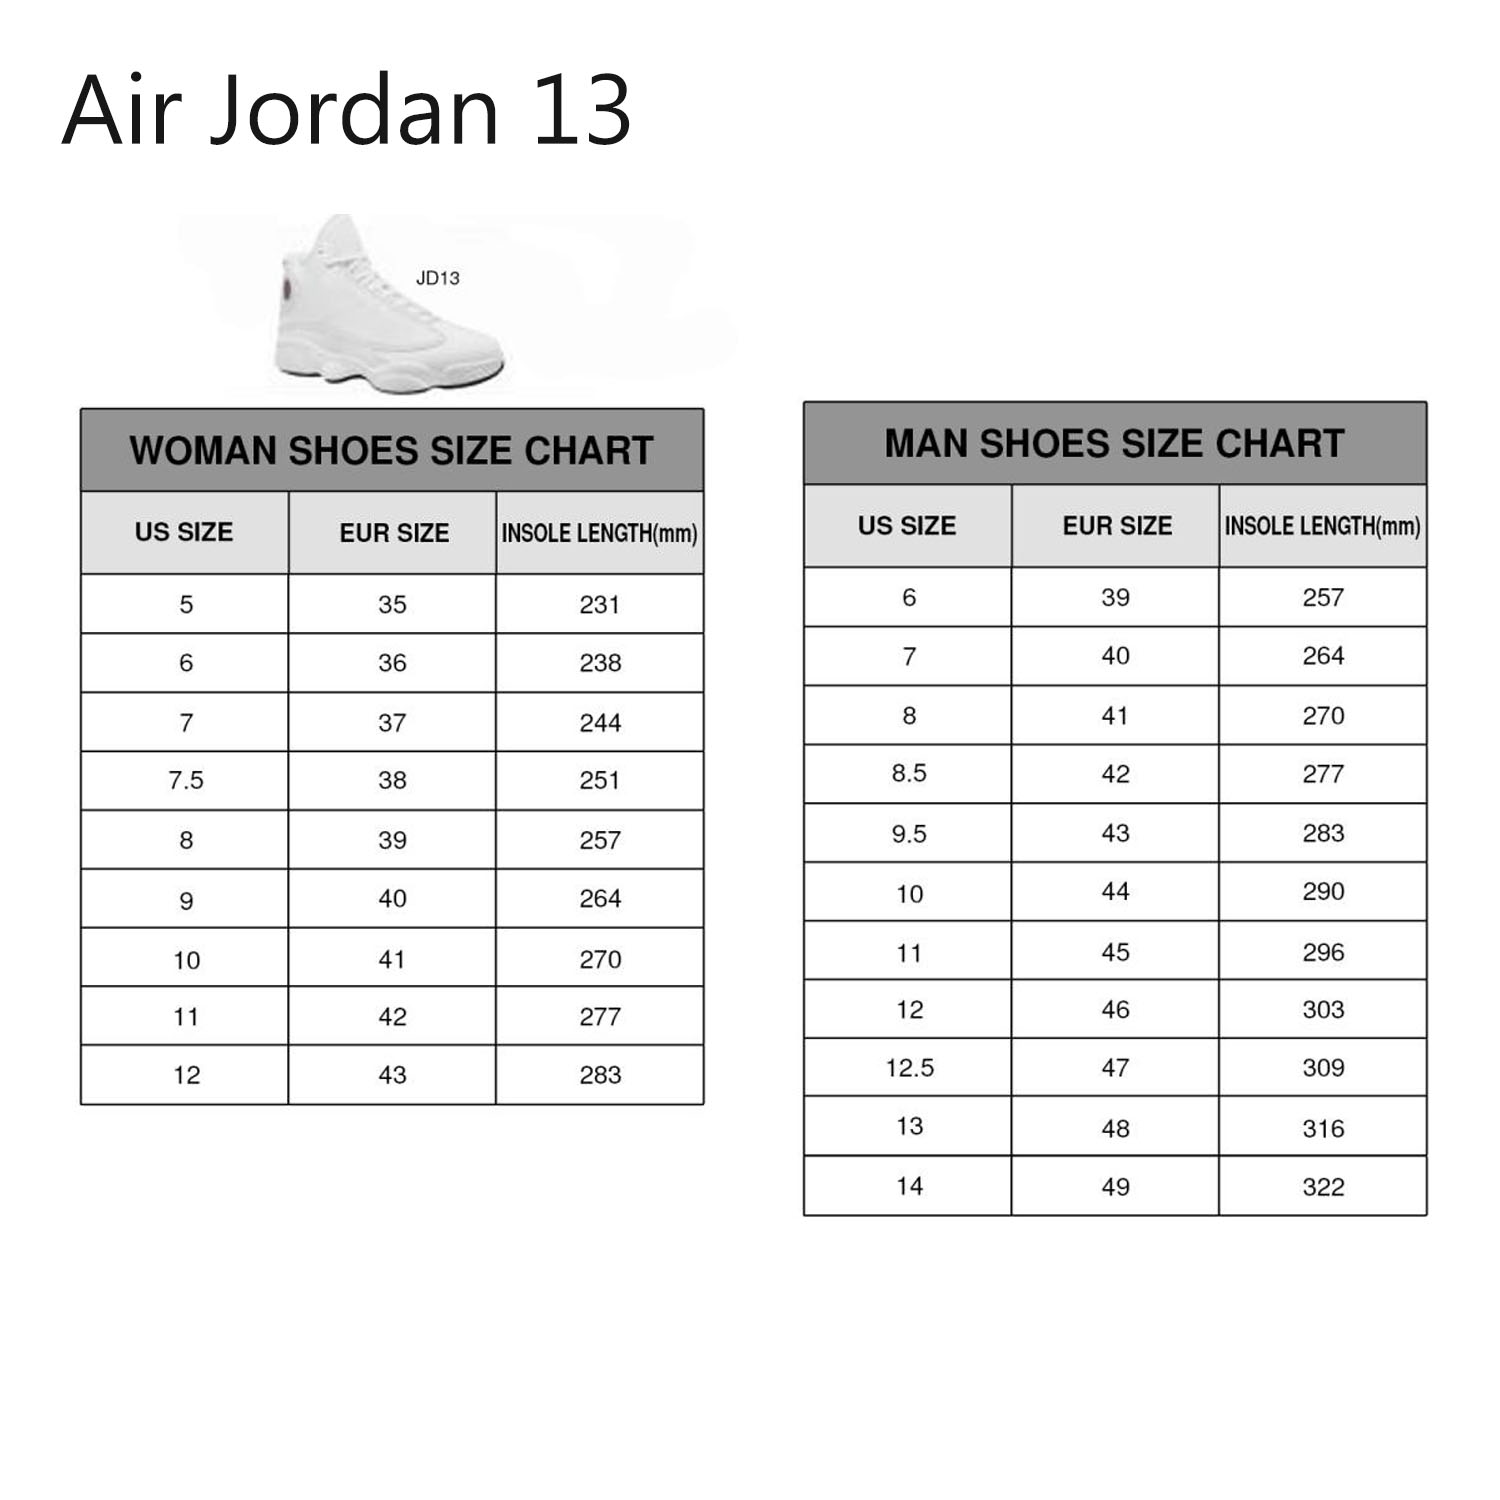 Air Jordan 13 Size Chartpx For Fans Kobe Bryant Air Jordan 13 Lakers Shoes